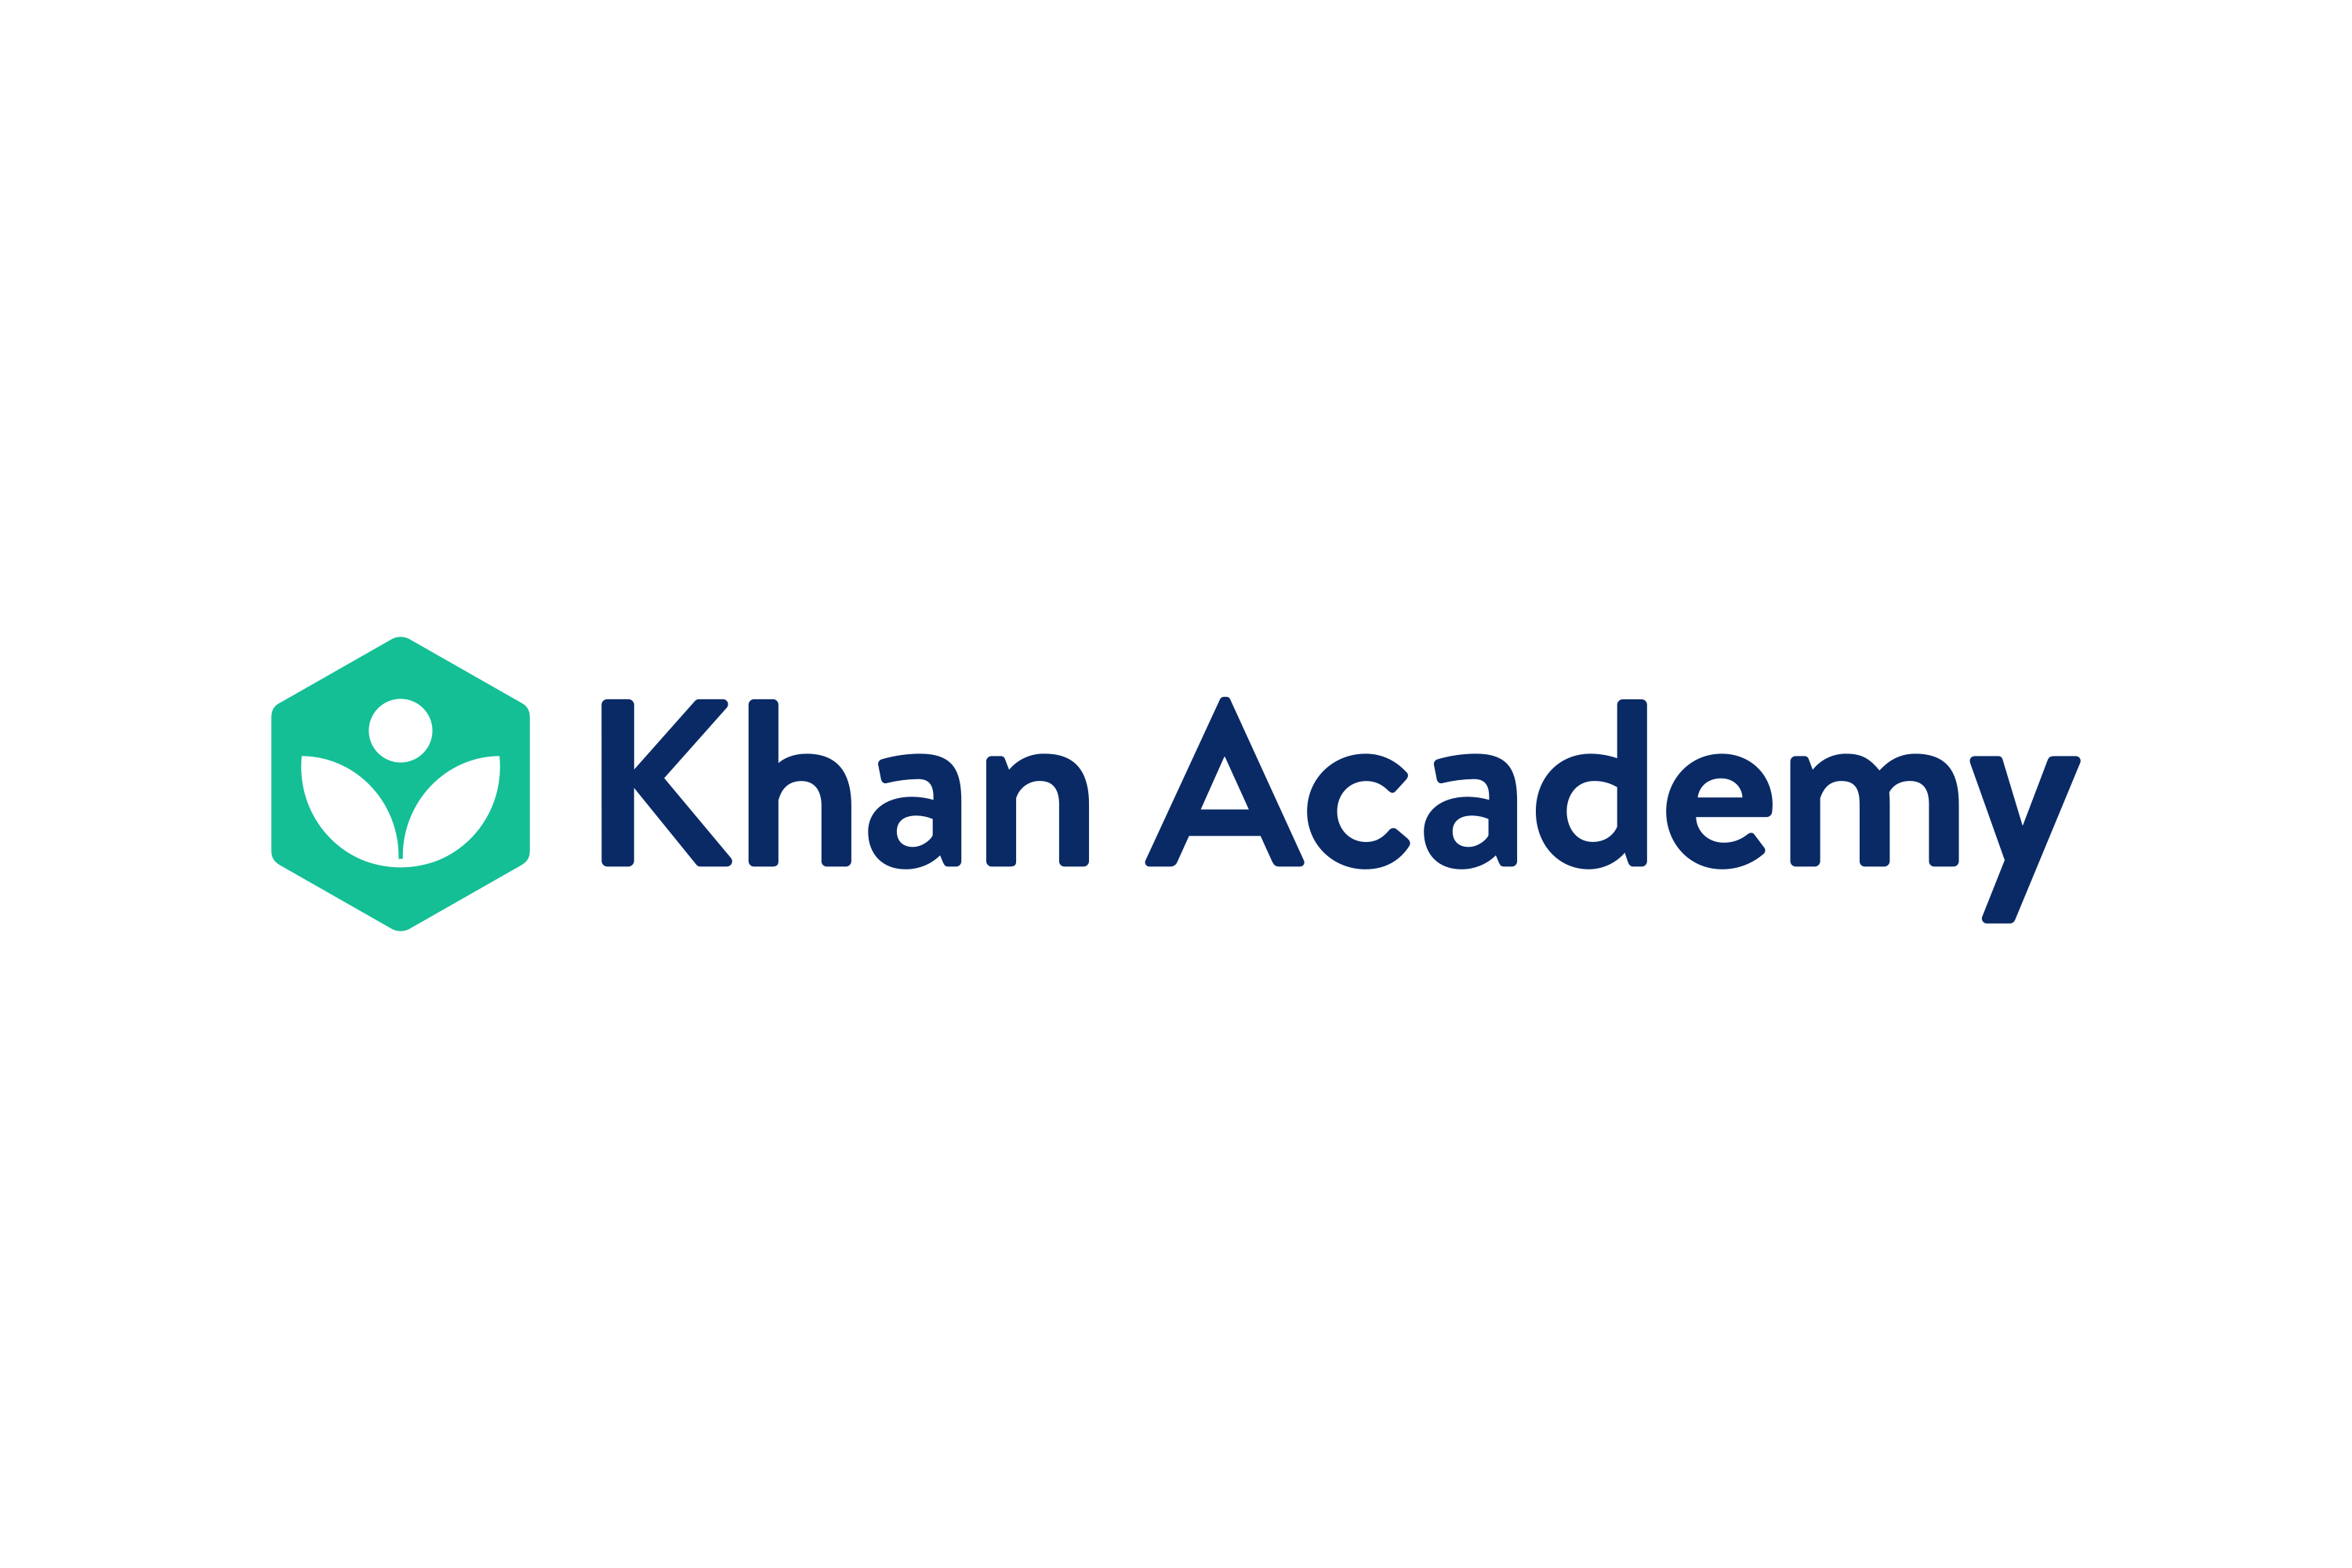 Khan_Academy